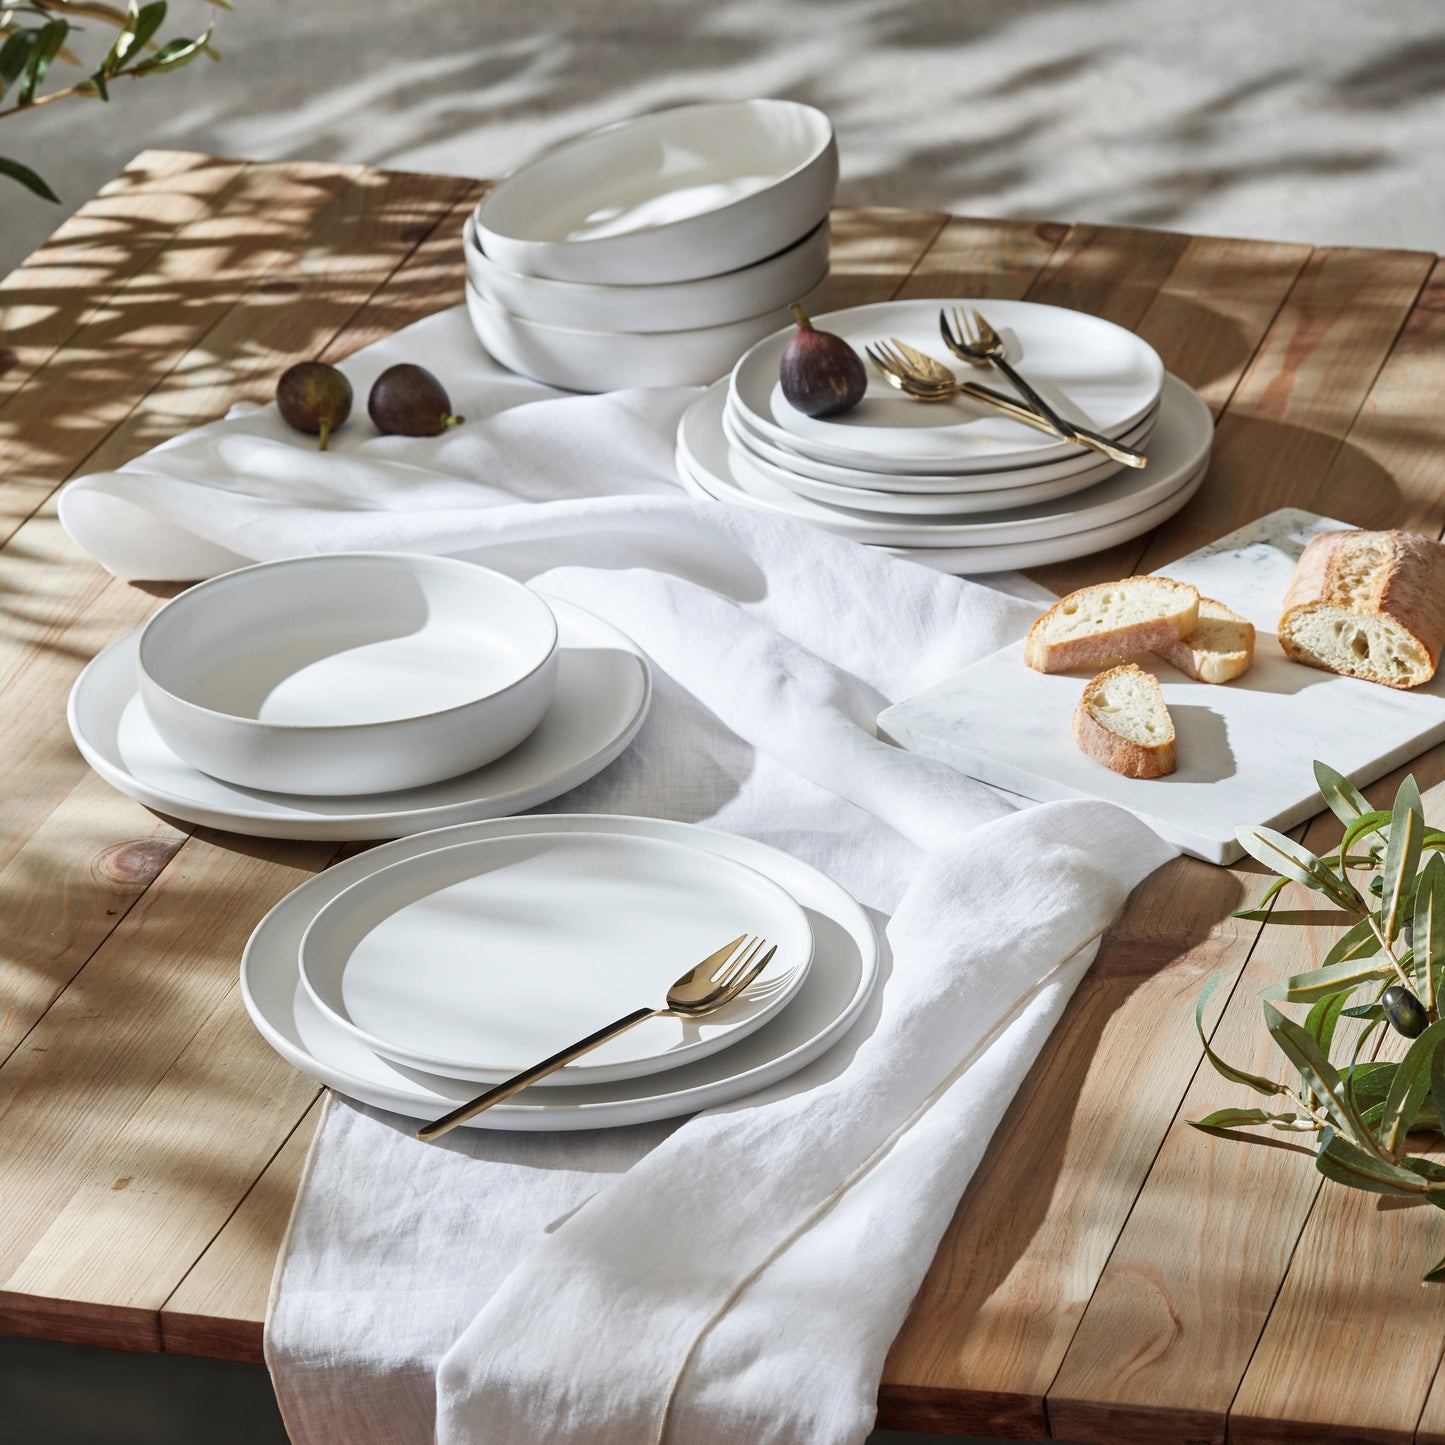 Macchio Stoneware Dinnerware Set - White Matte - Crafted in Portugal - Scratch-Resistant